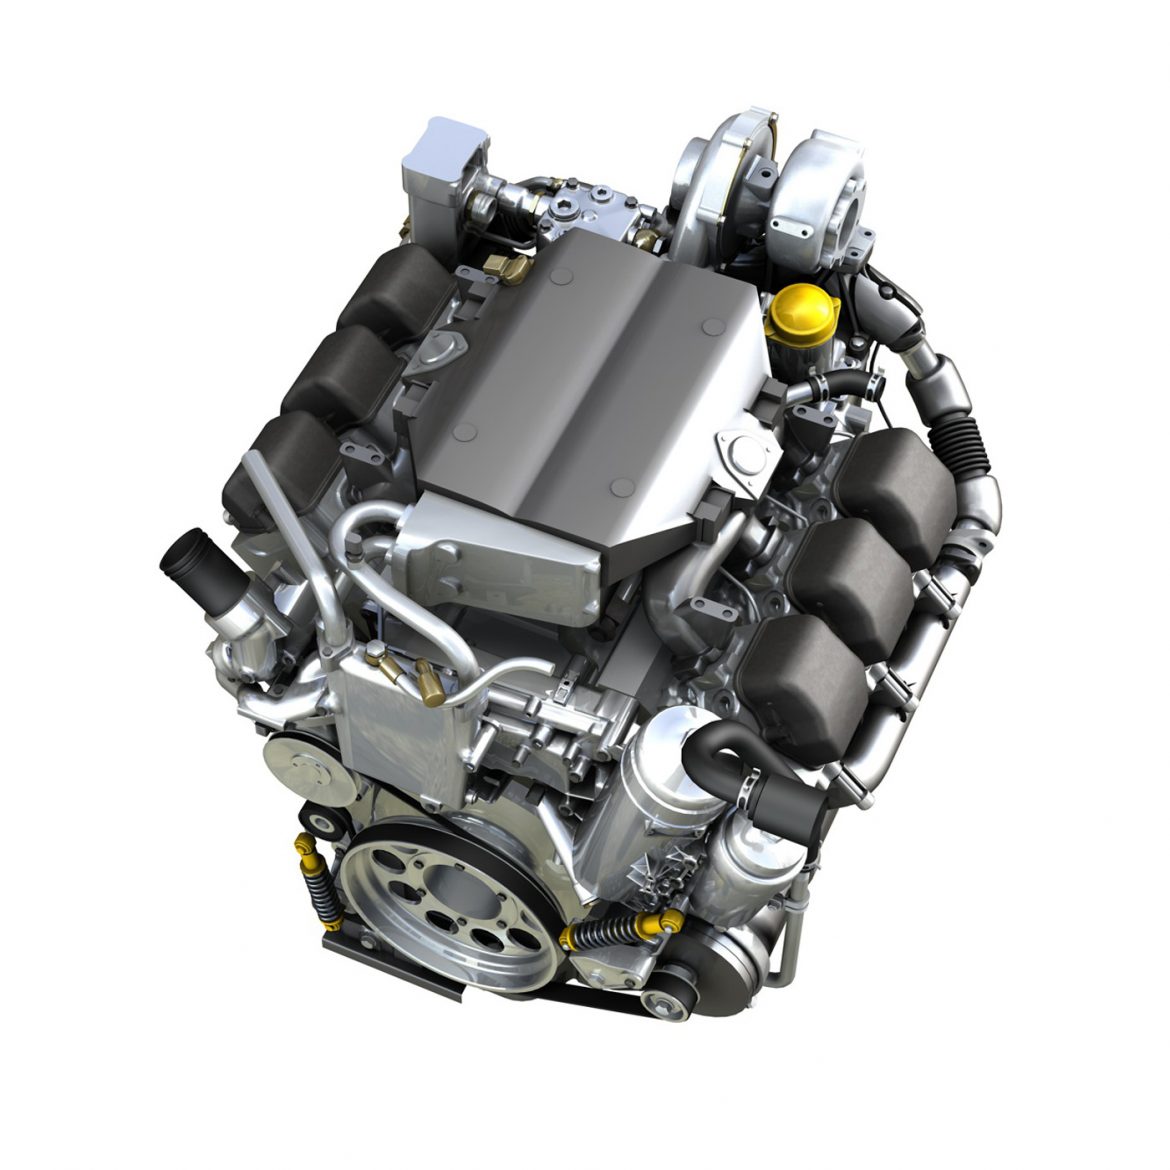 diesel turbo engine with interior parts 3d model 3ds fbx c4d lwo obj 299694